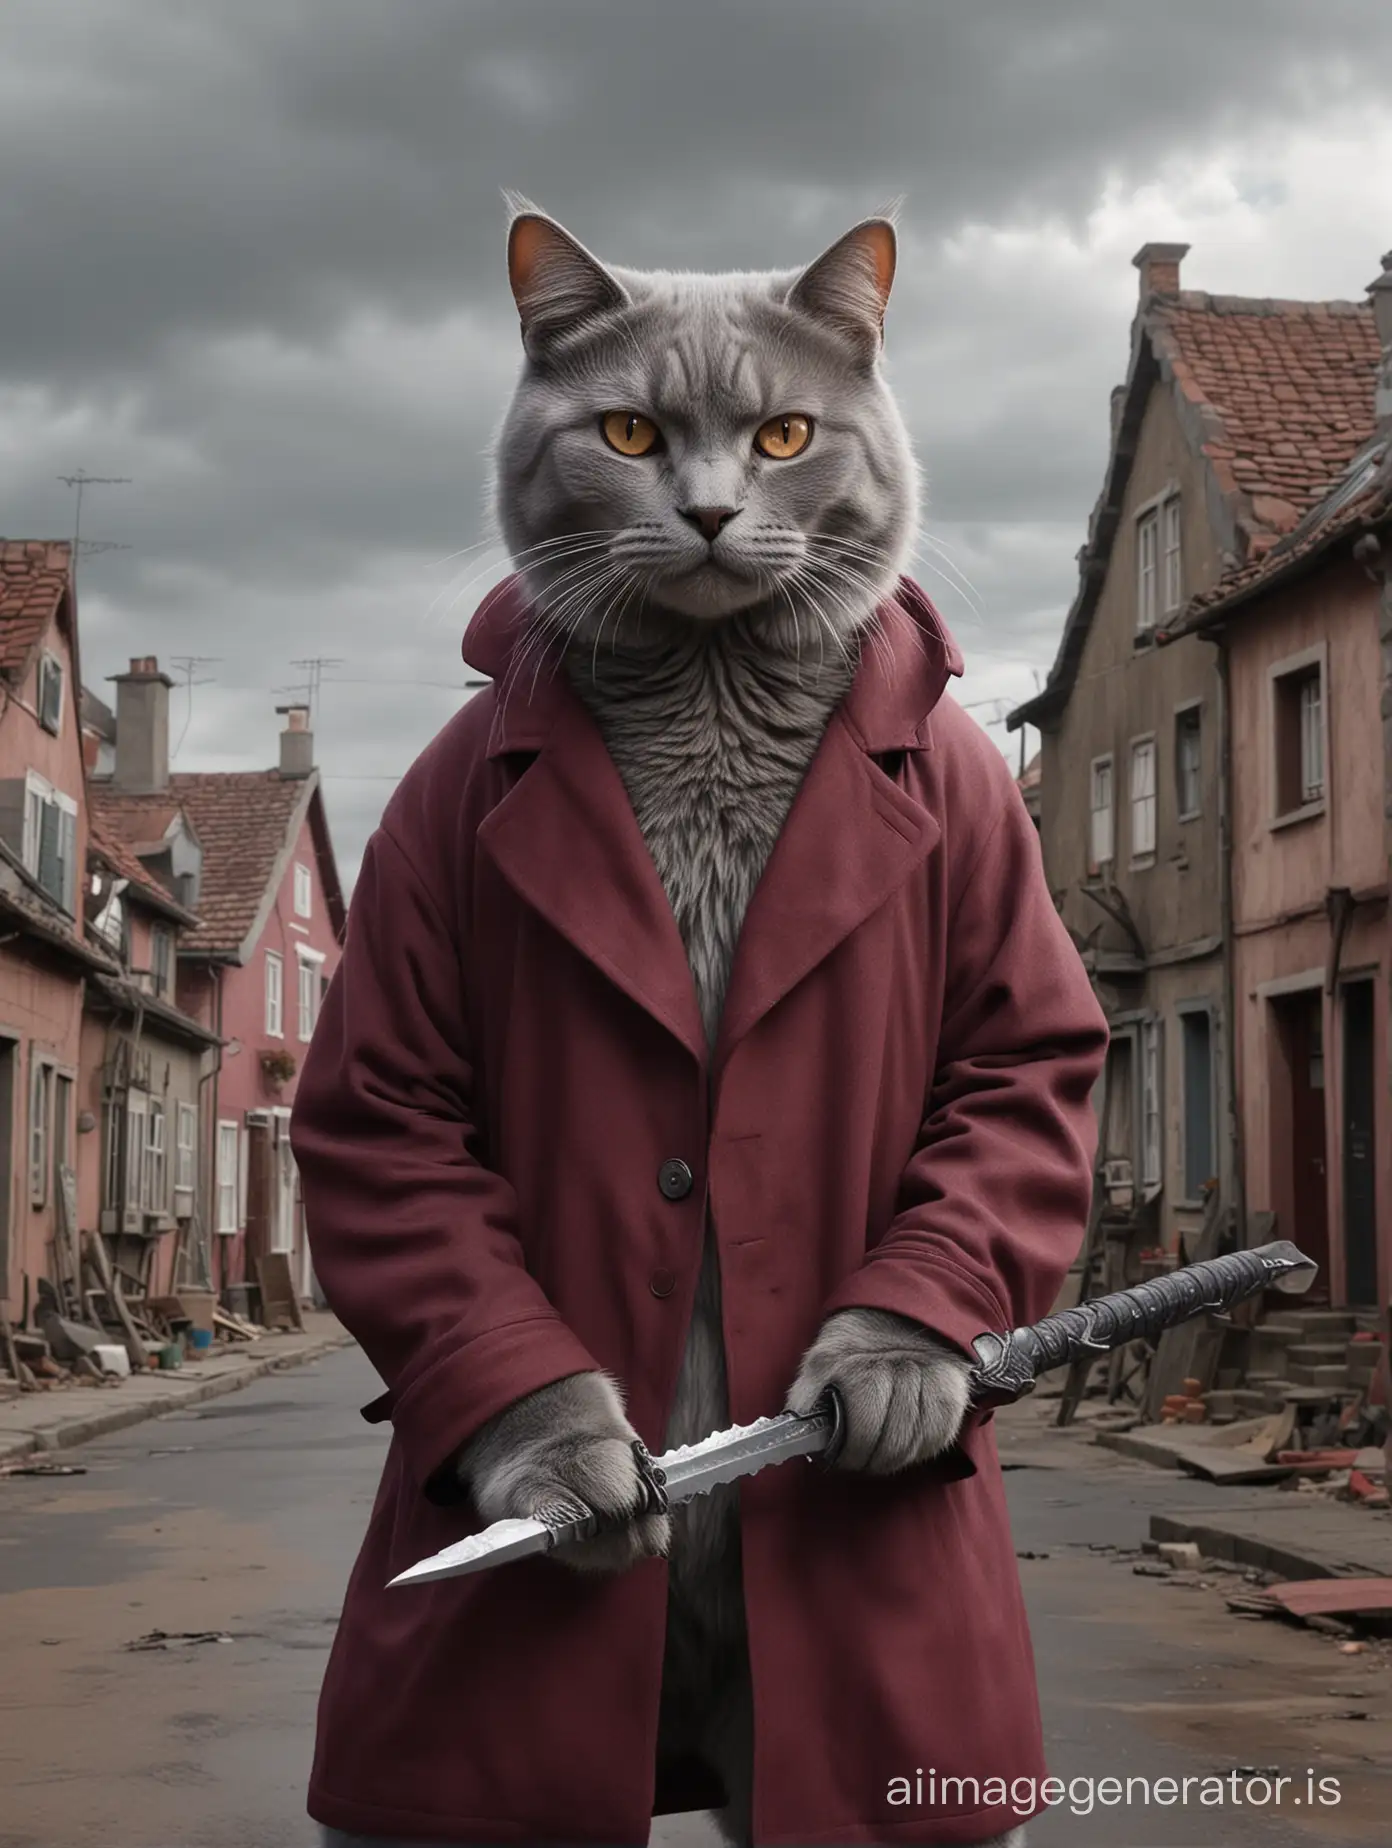 Giant-Cat-in-Burgundy-Coat-Demolishing-Townscape-with-Sword-Fantasy-Destruction-Scene-in-4K-Realistic-HD